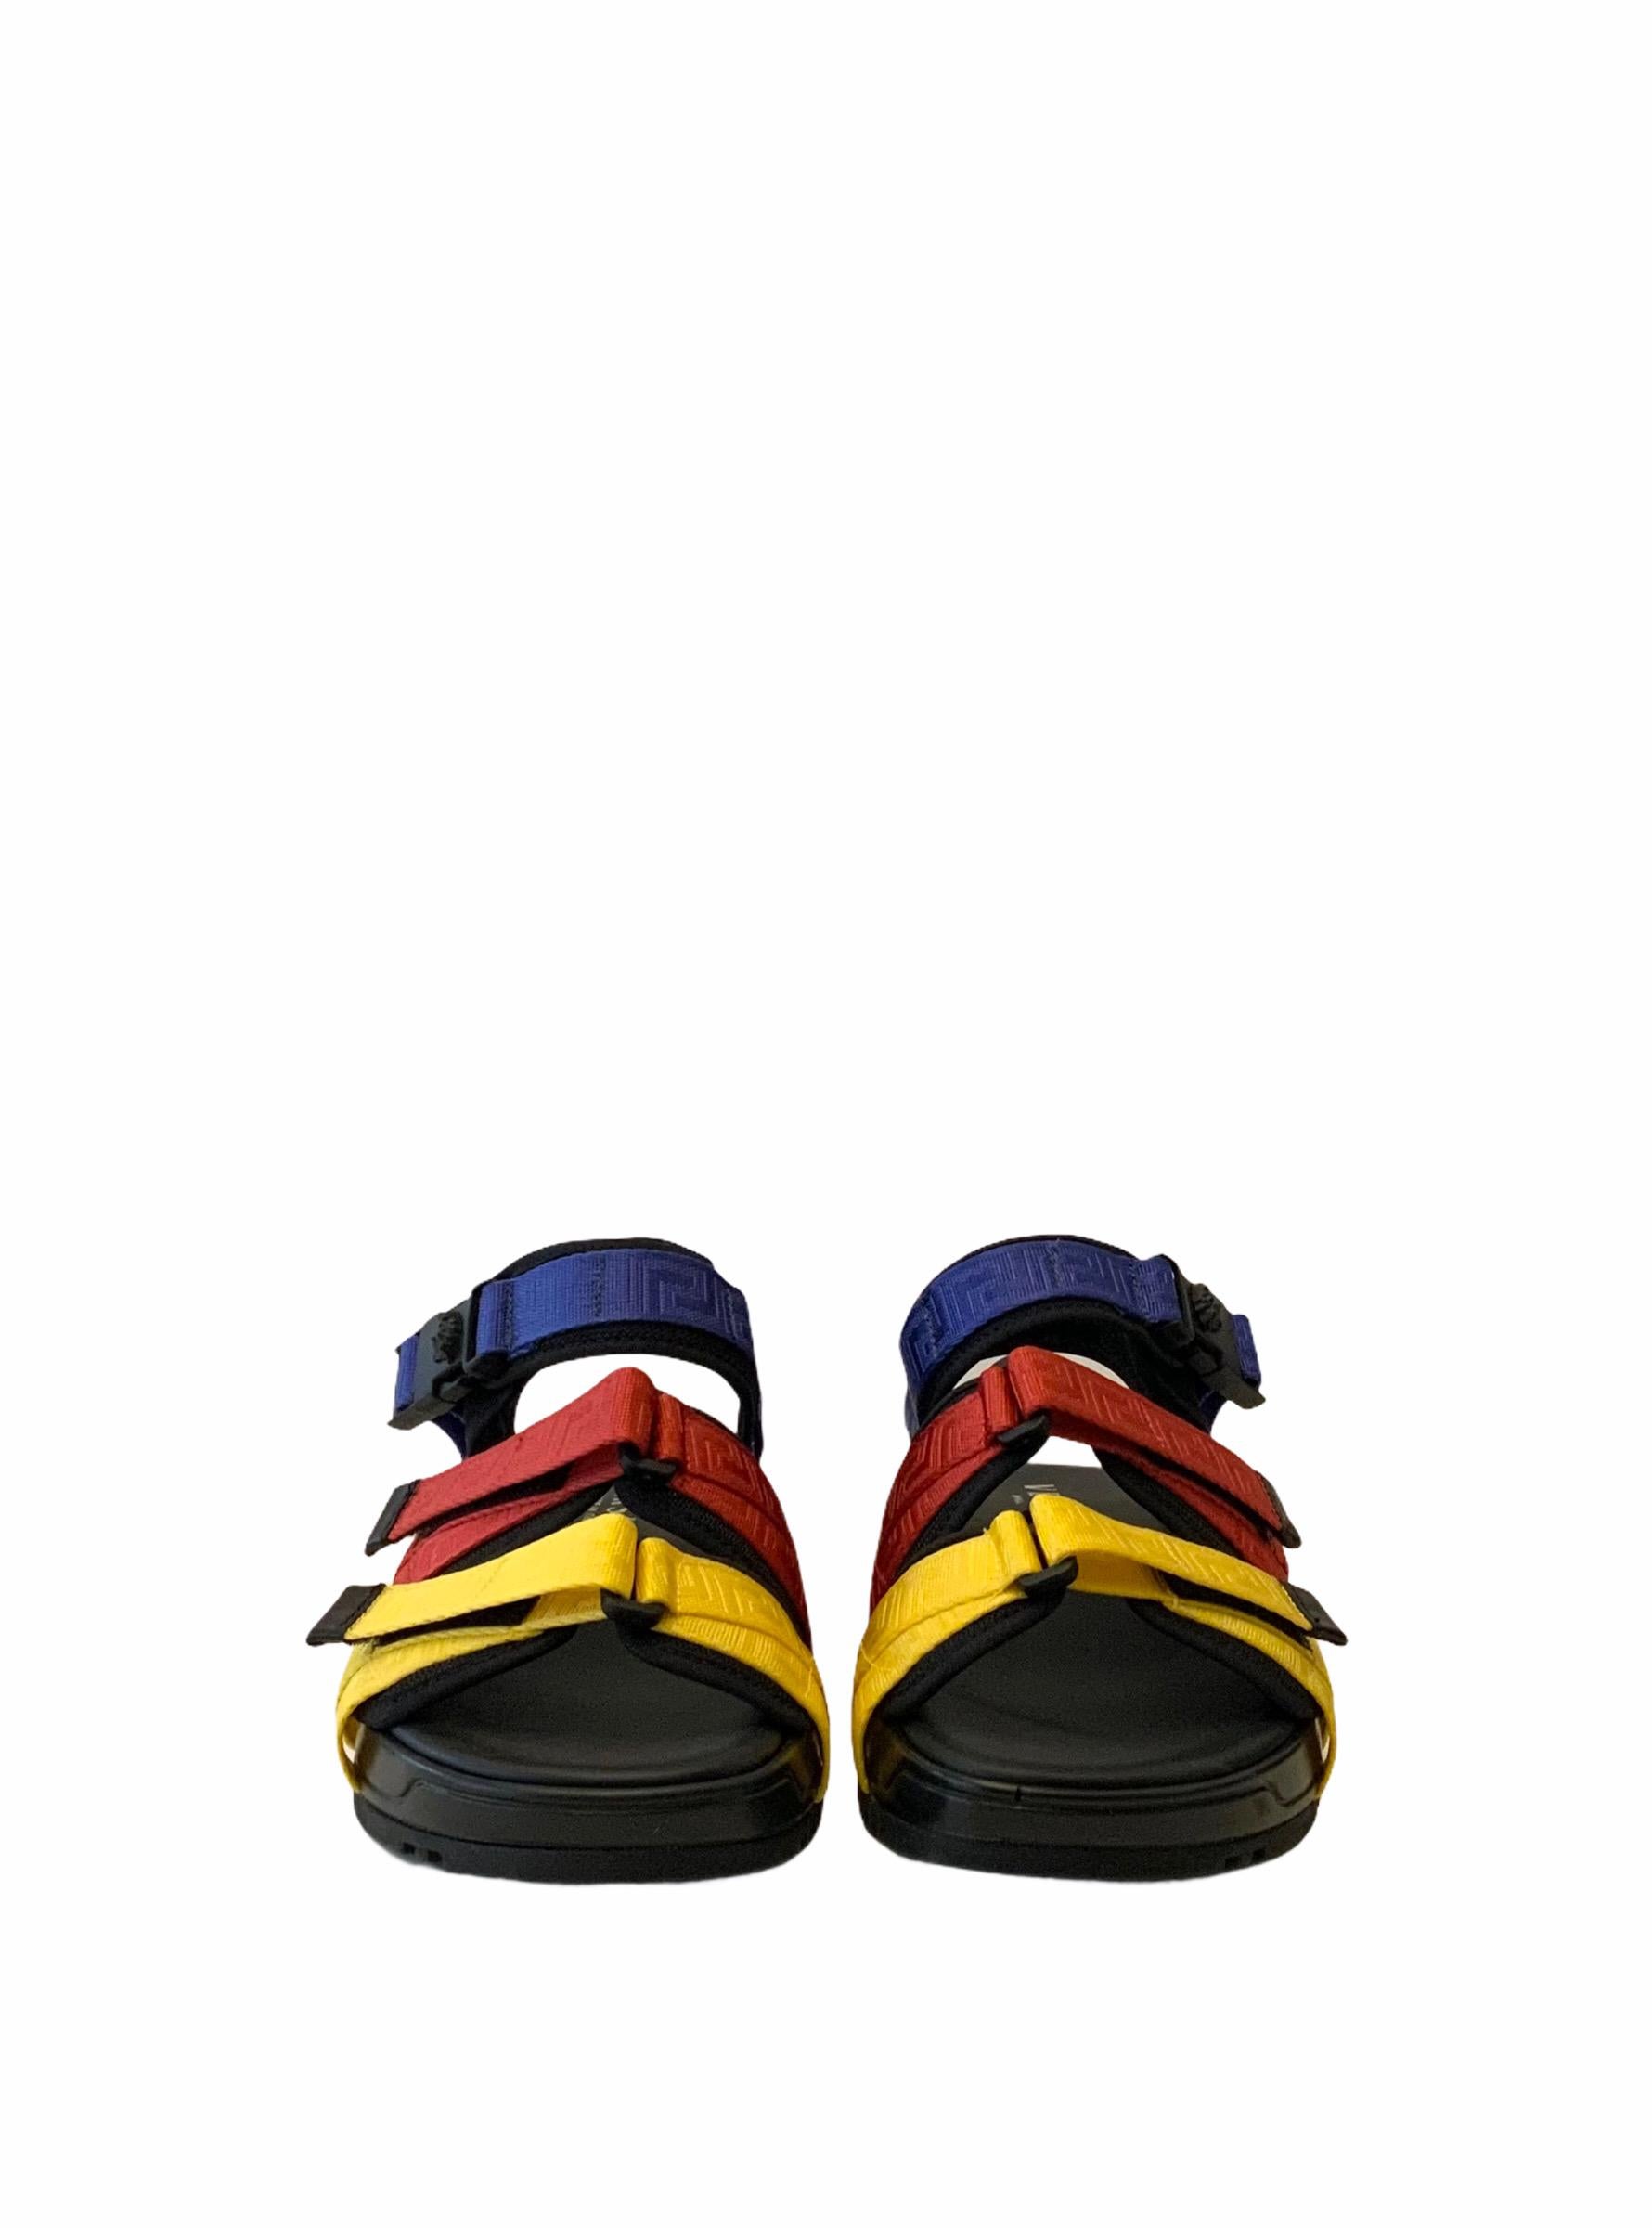 Women's or Men's Versace Multicolor Strap Greca Sandals